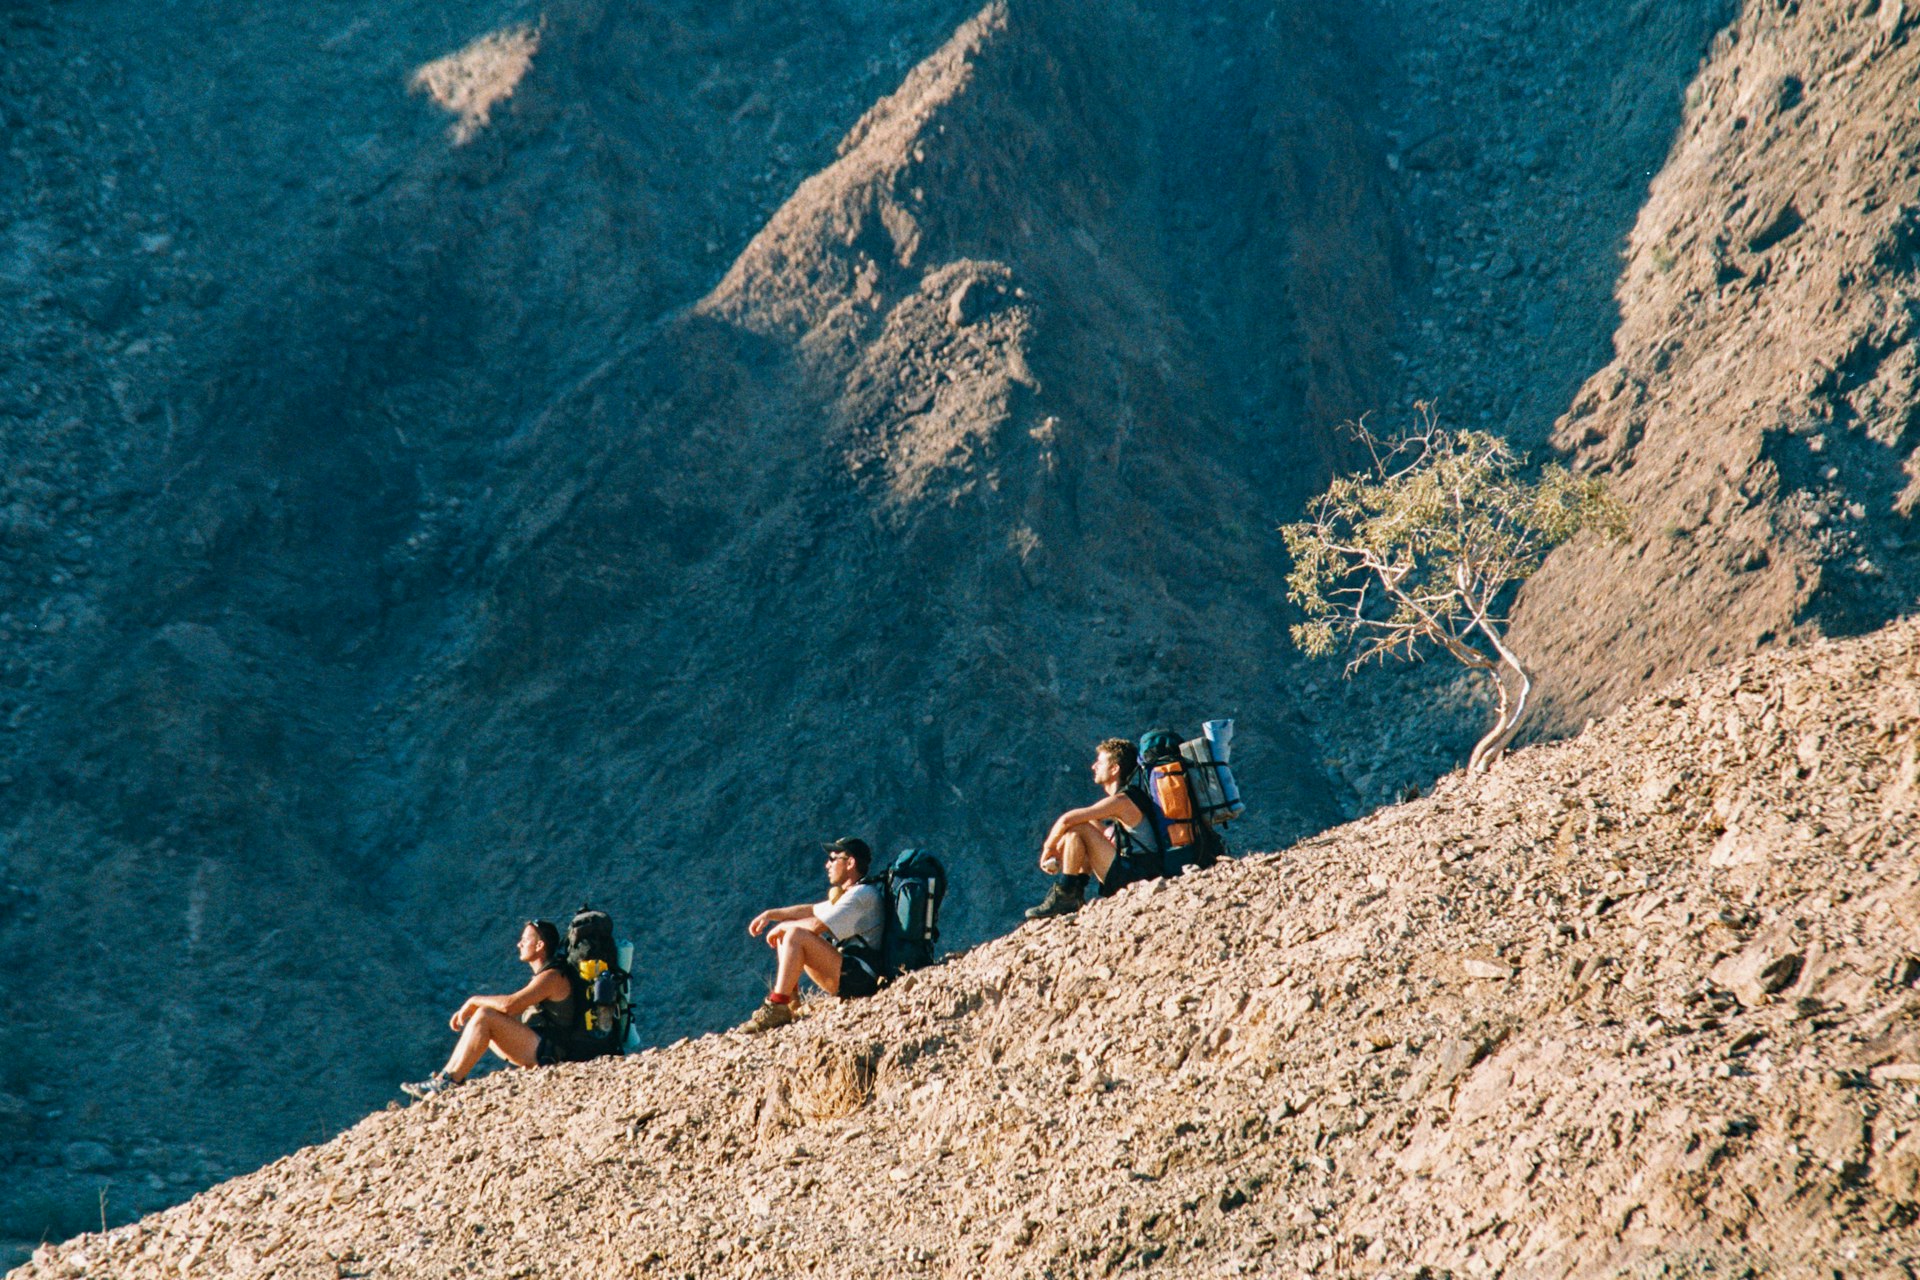 Three hikers sitting on a ridge in a mountainous arid area